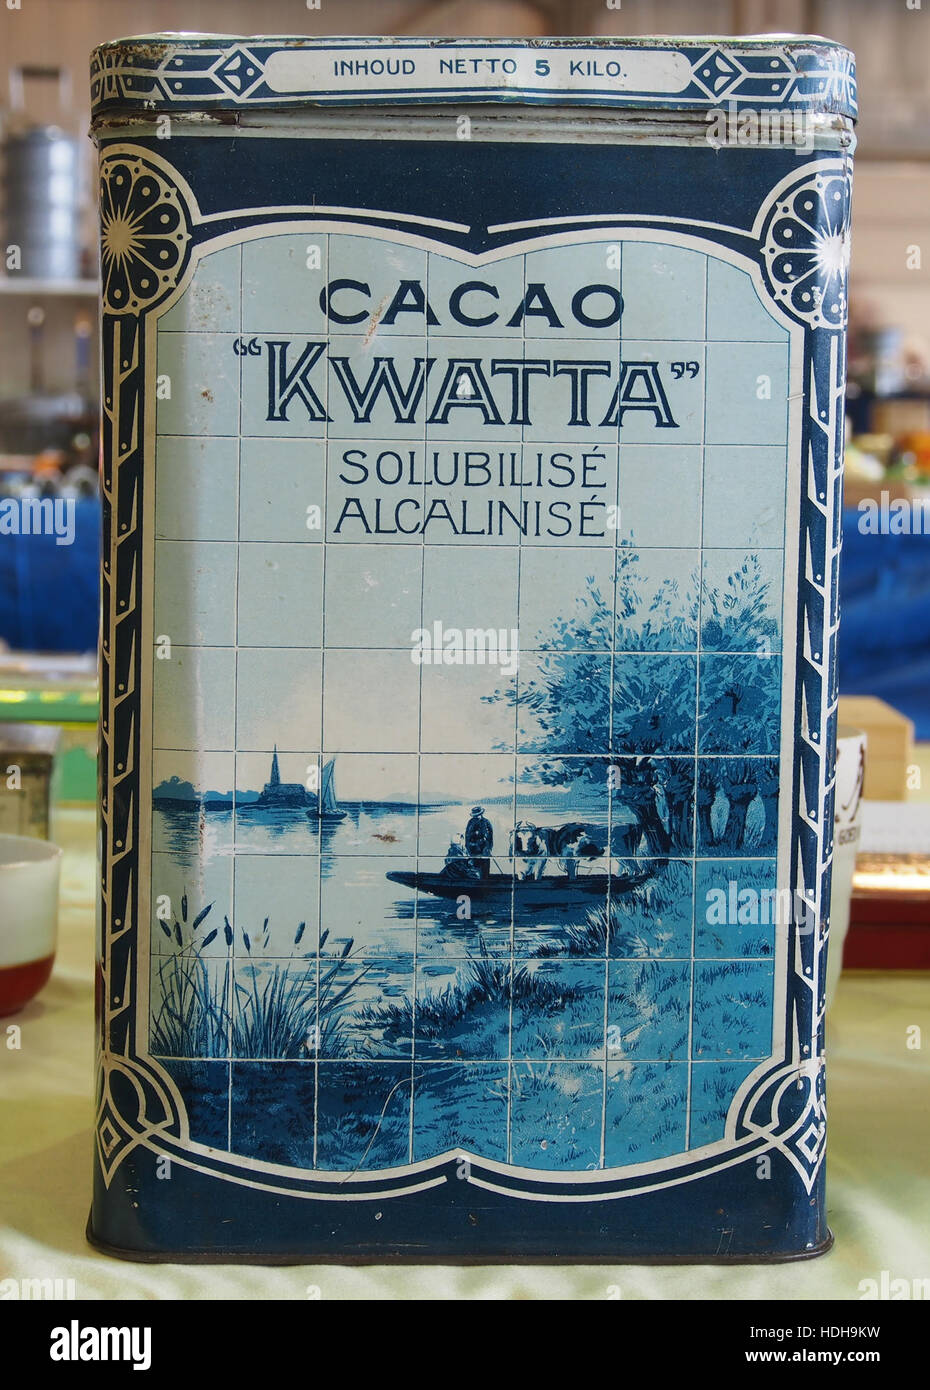 Kwattas dutch cocoa 5kg blik pic5 Stock Photo